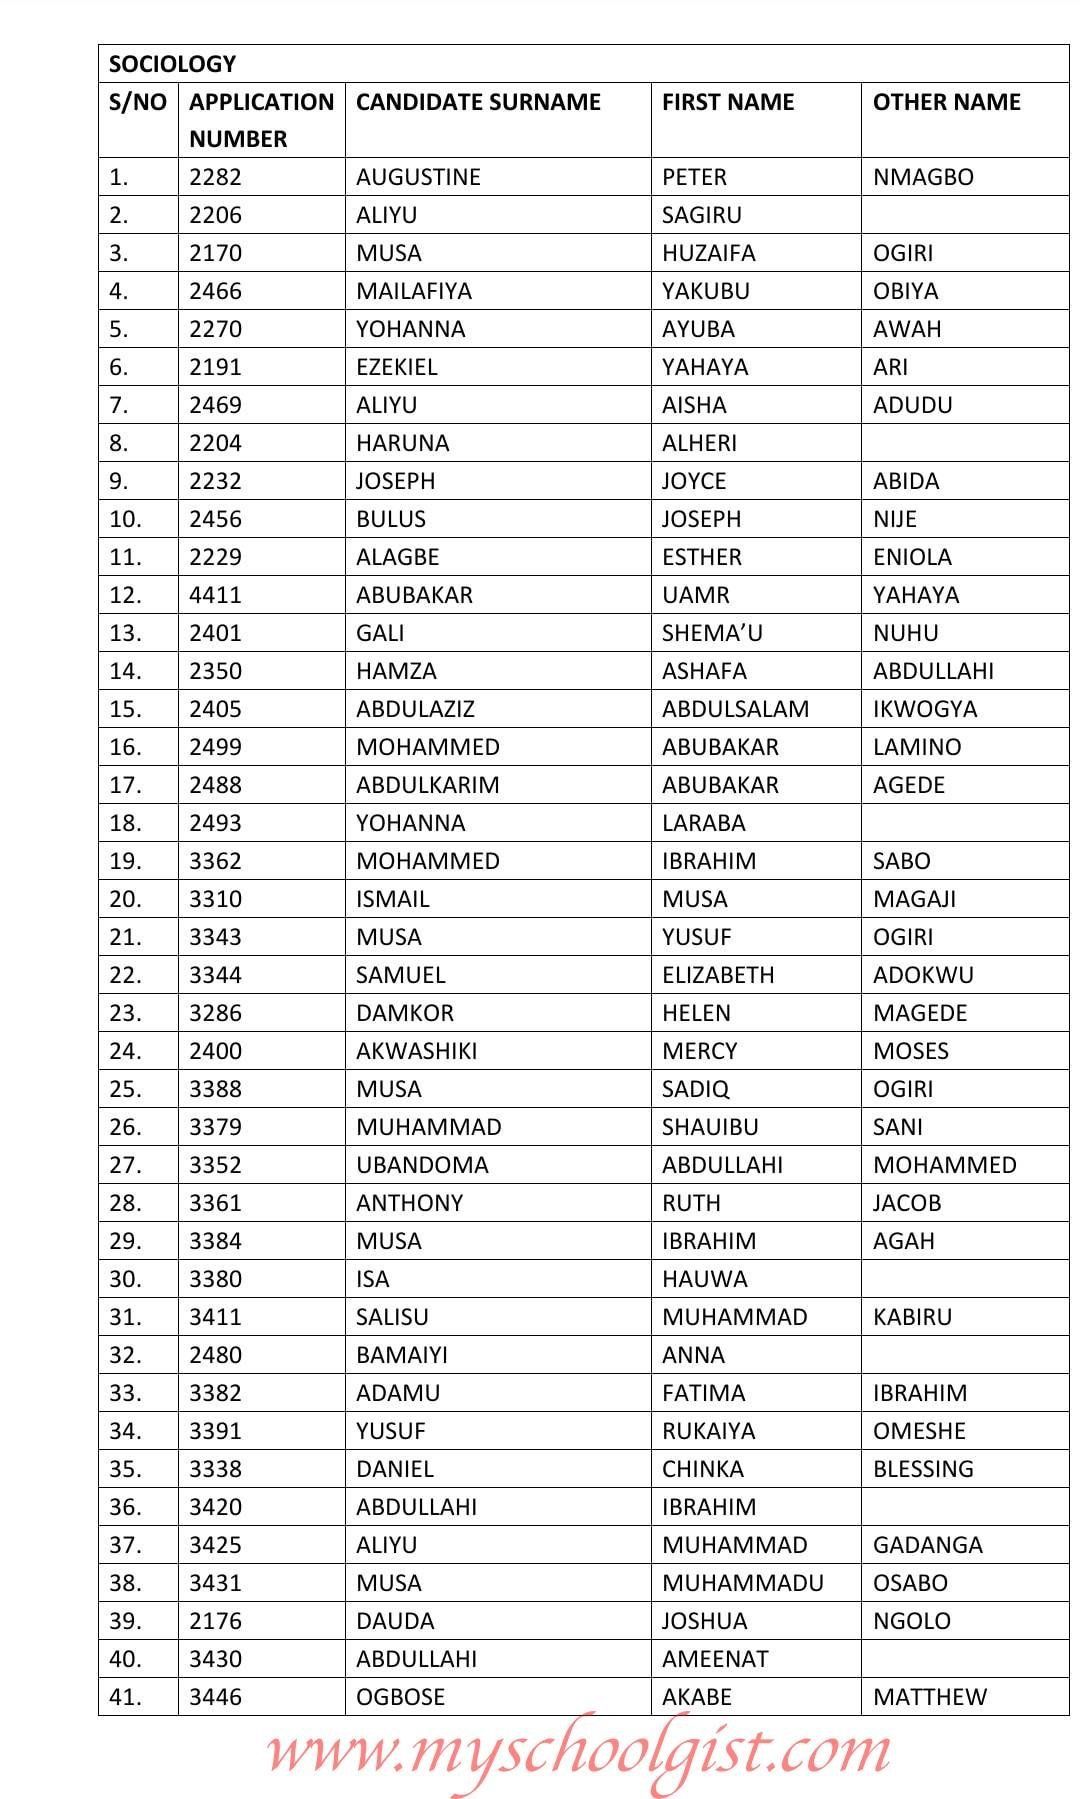 FULAFIA Part-Time Degree Admission List - 2nd Batch 